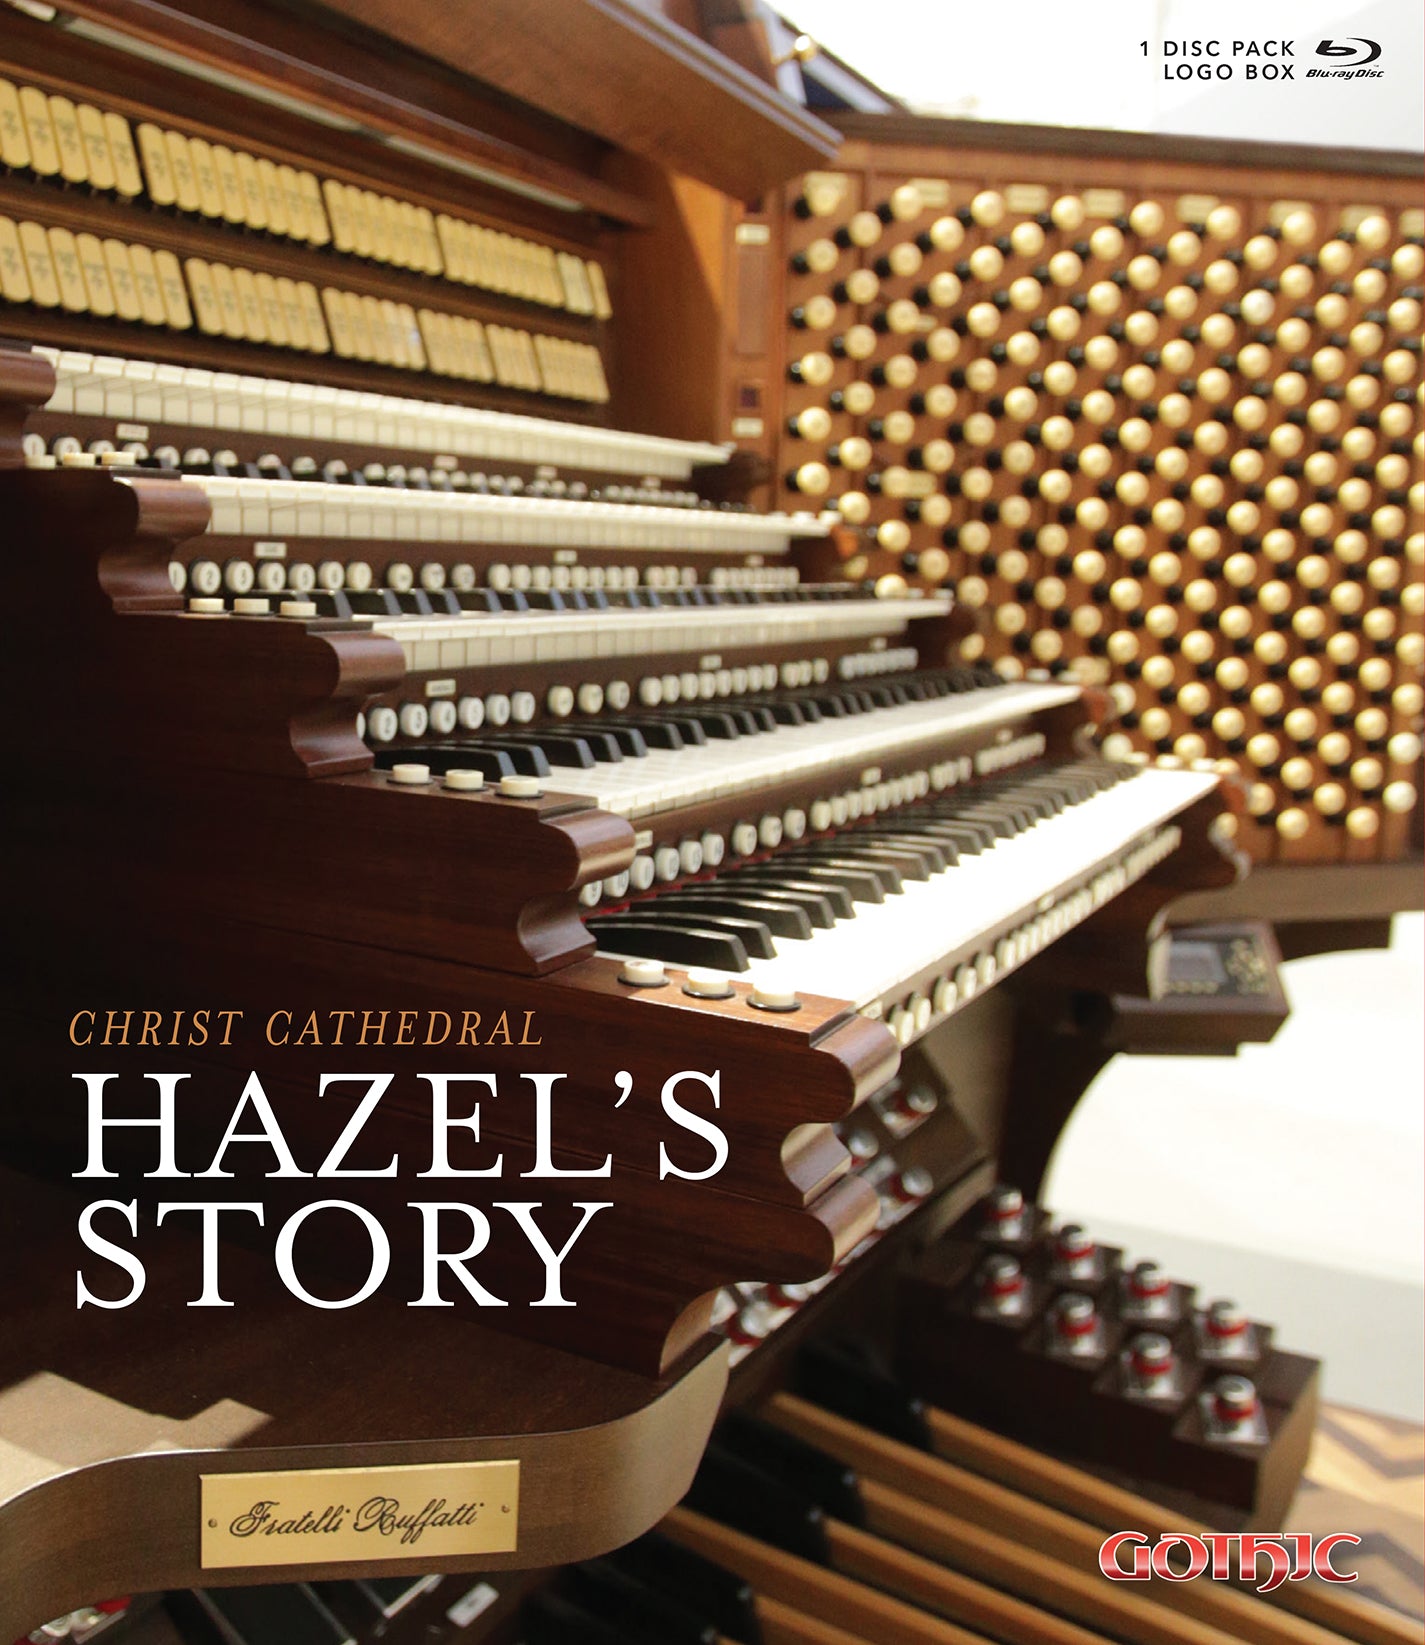 Ficcari, Gigout & Zimmer: Hazel's Story - Organ Music